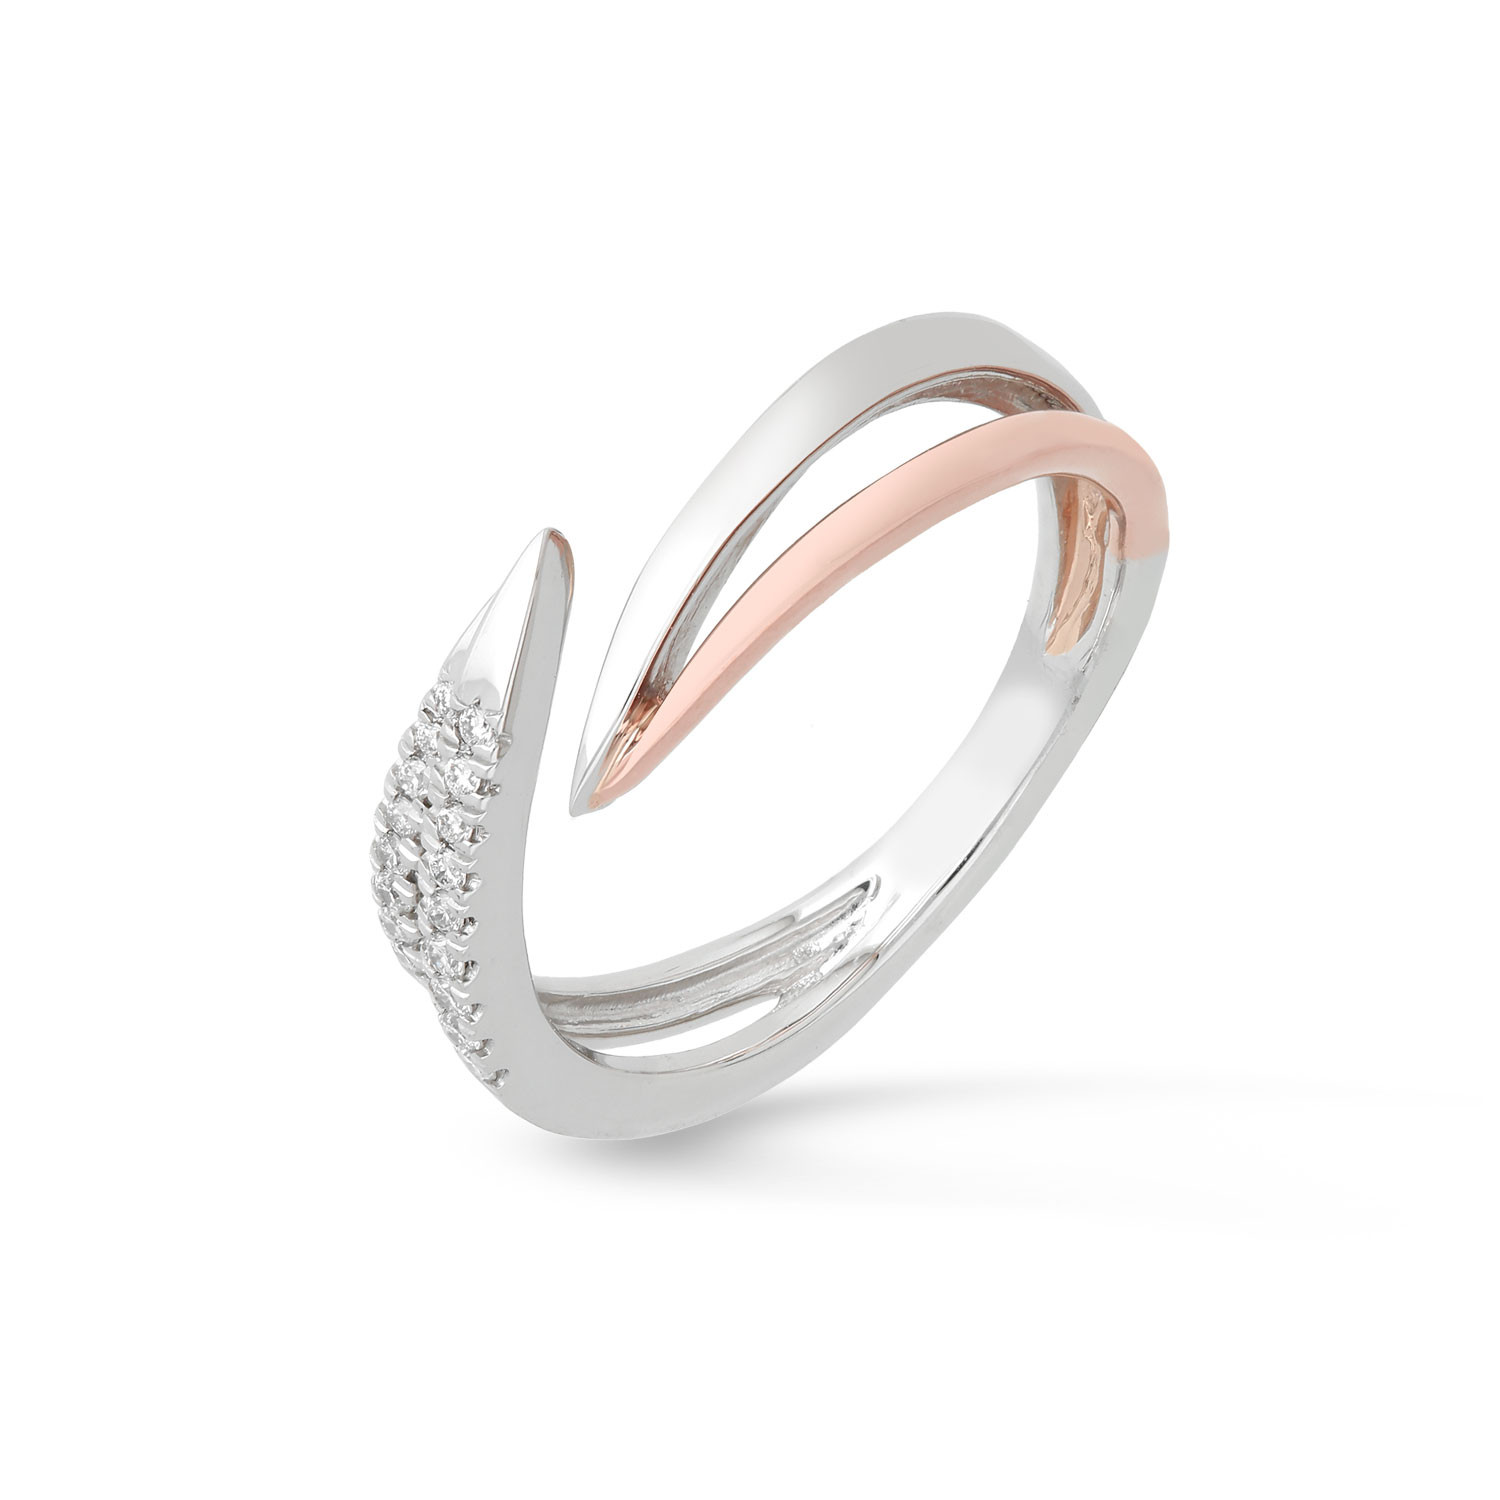 Men's wedding rings by Chaumet - Wedding rings in gold, platinum or diamond  for men